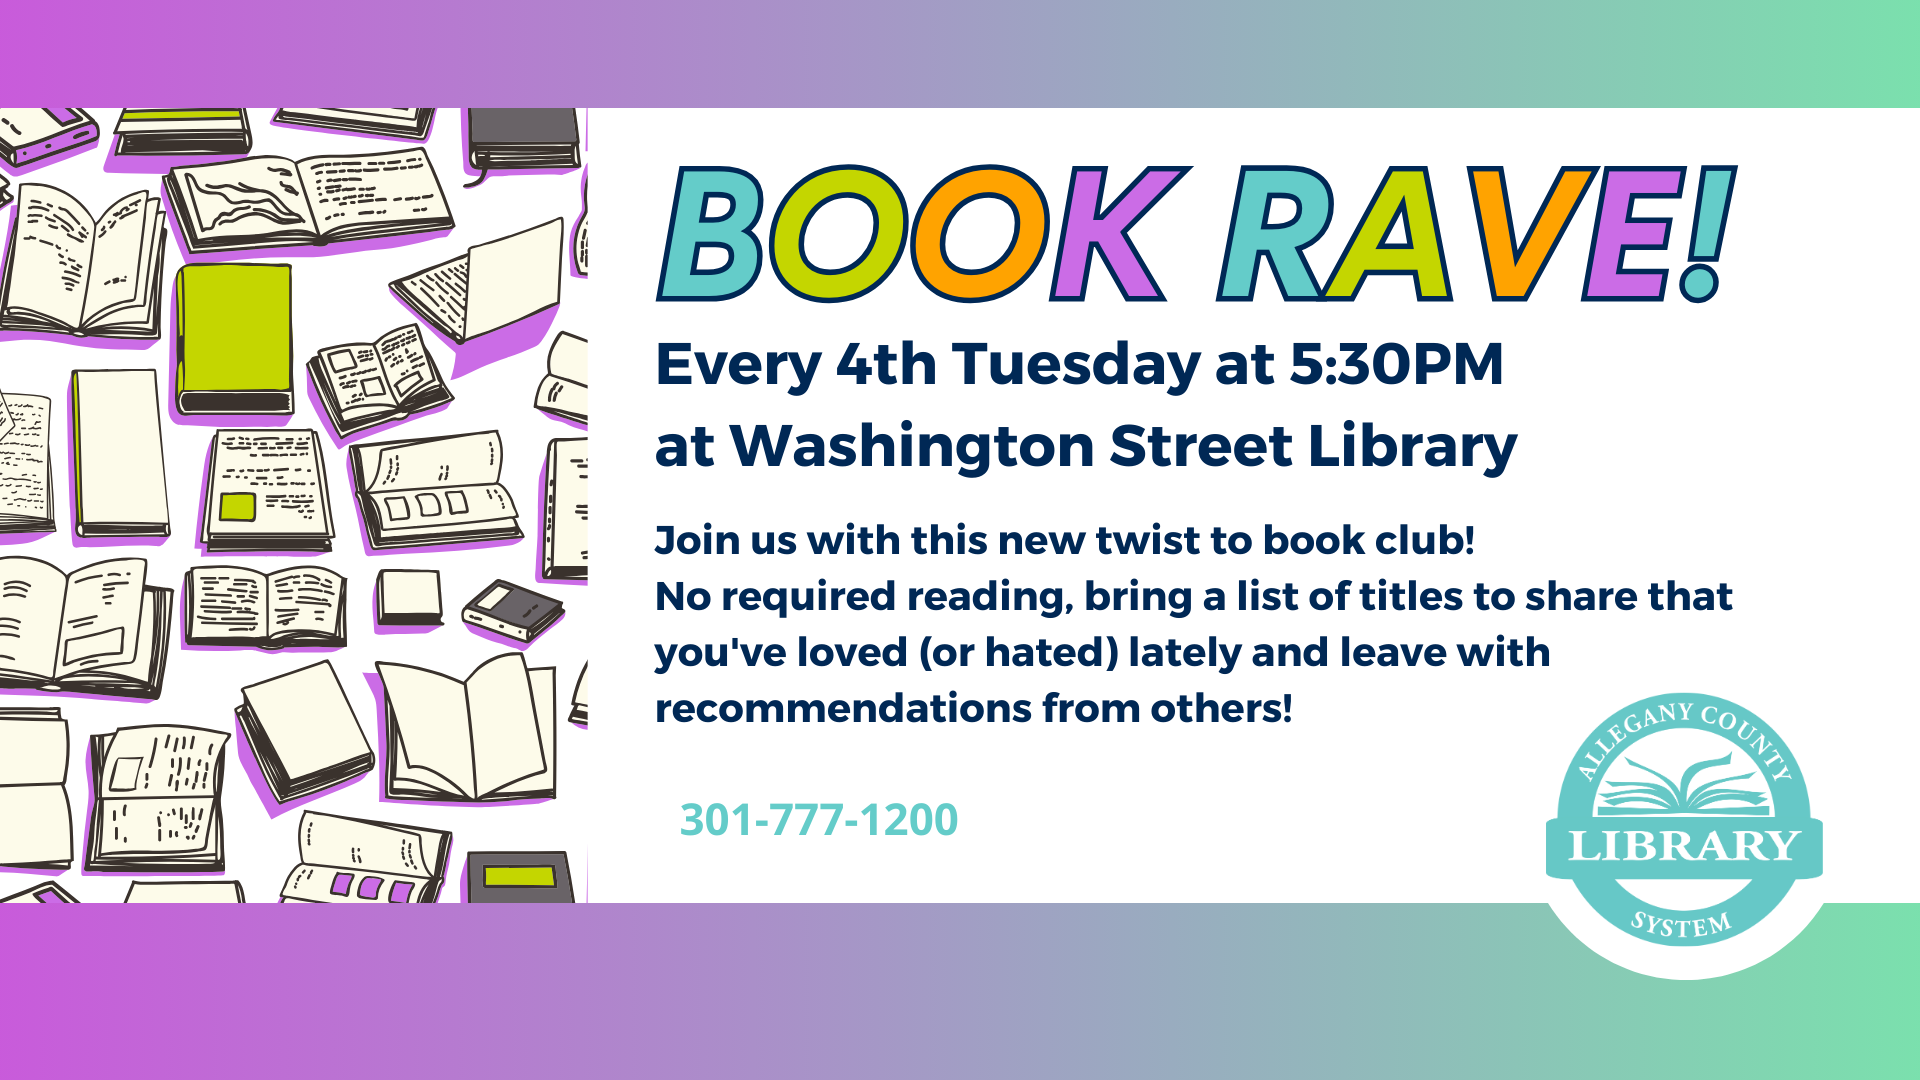 Book Rave event details